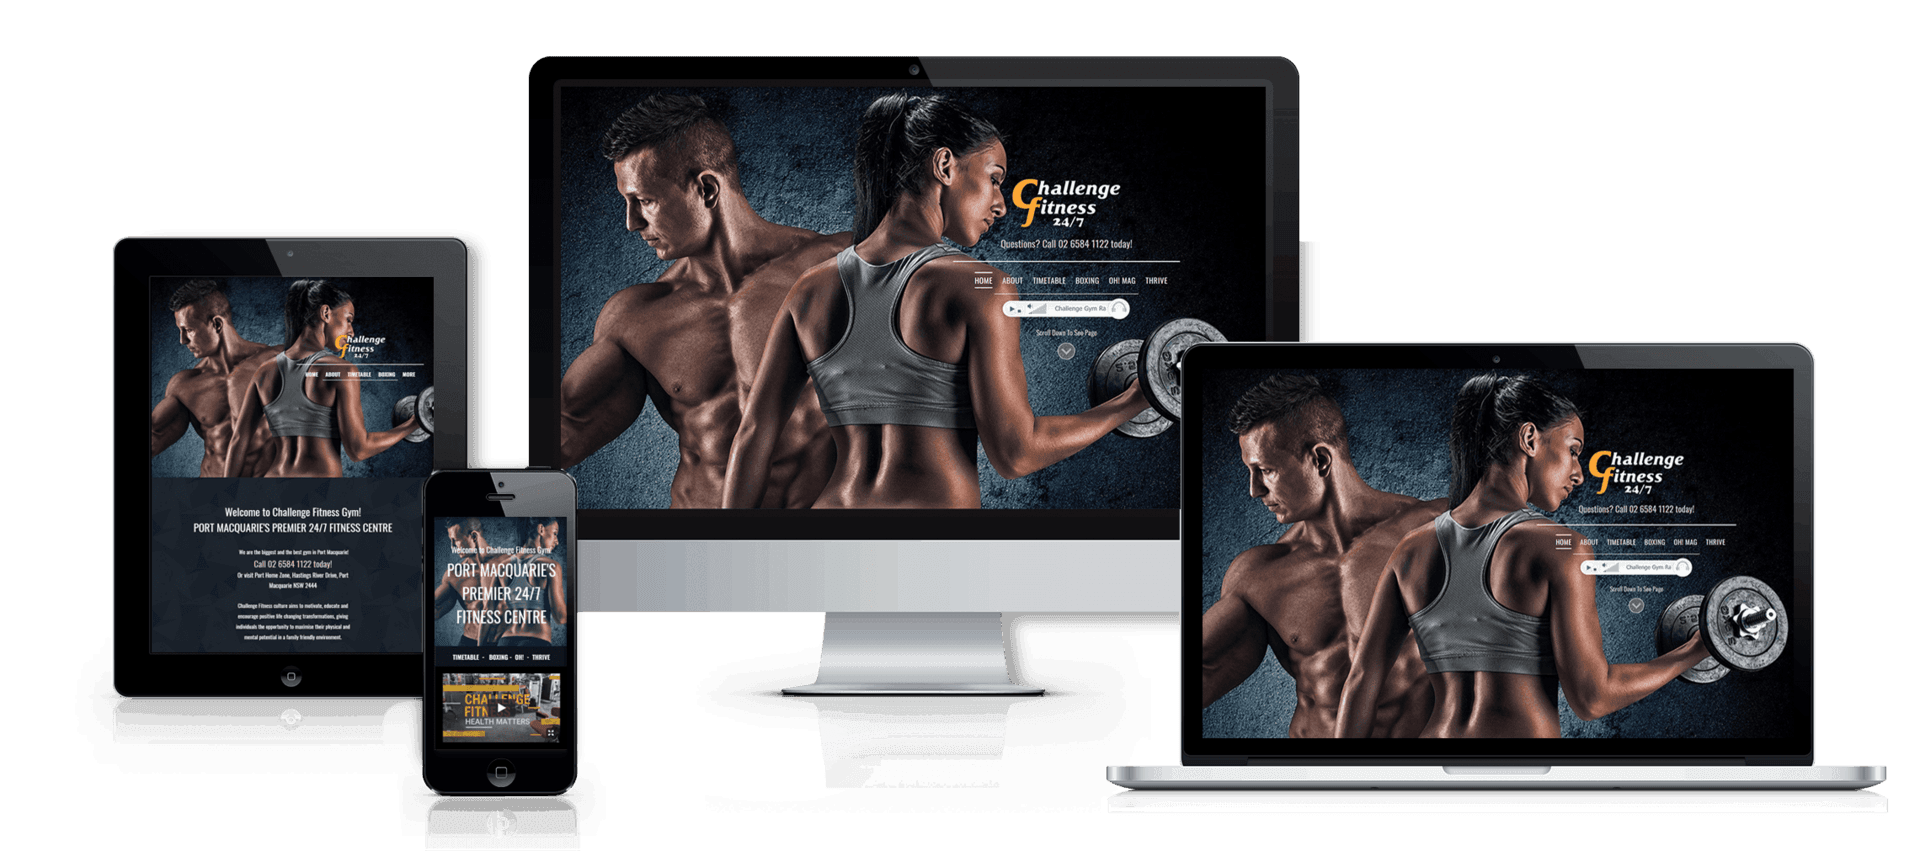 Edgezone Media client Challenge Fitness website image.